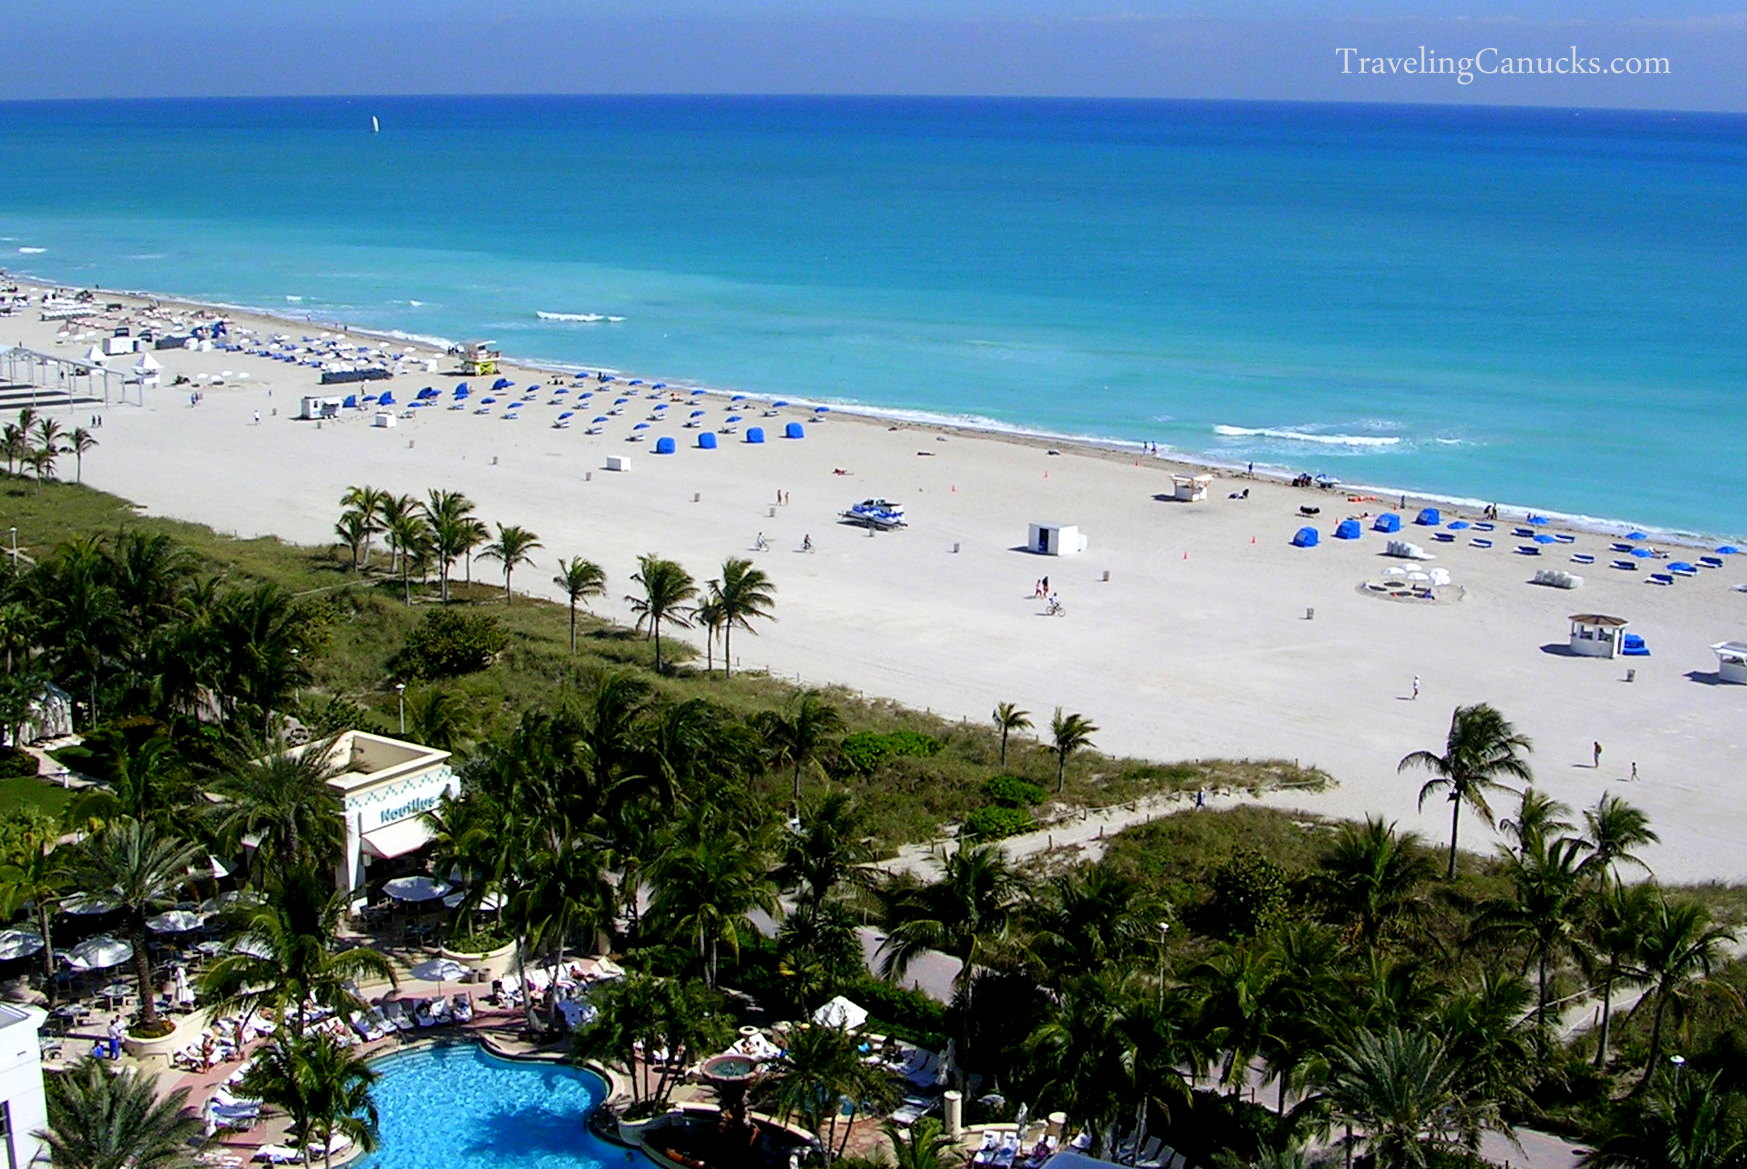 Layover in Miami? Check out Miami South Beach!